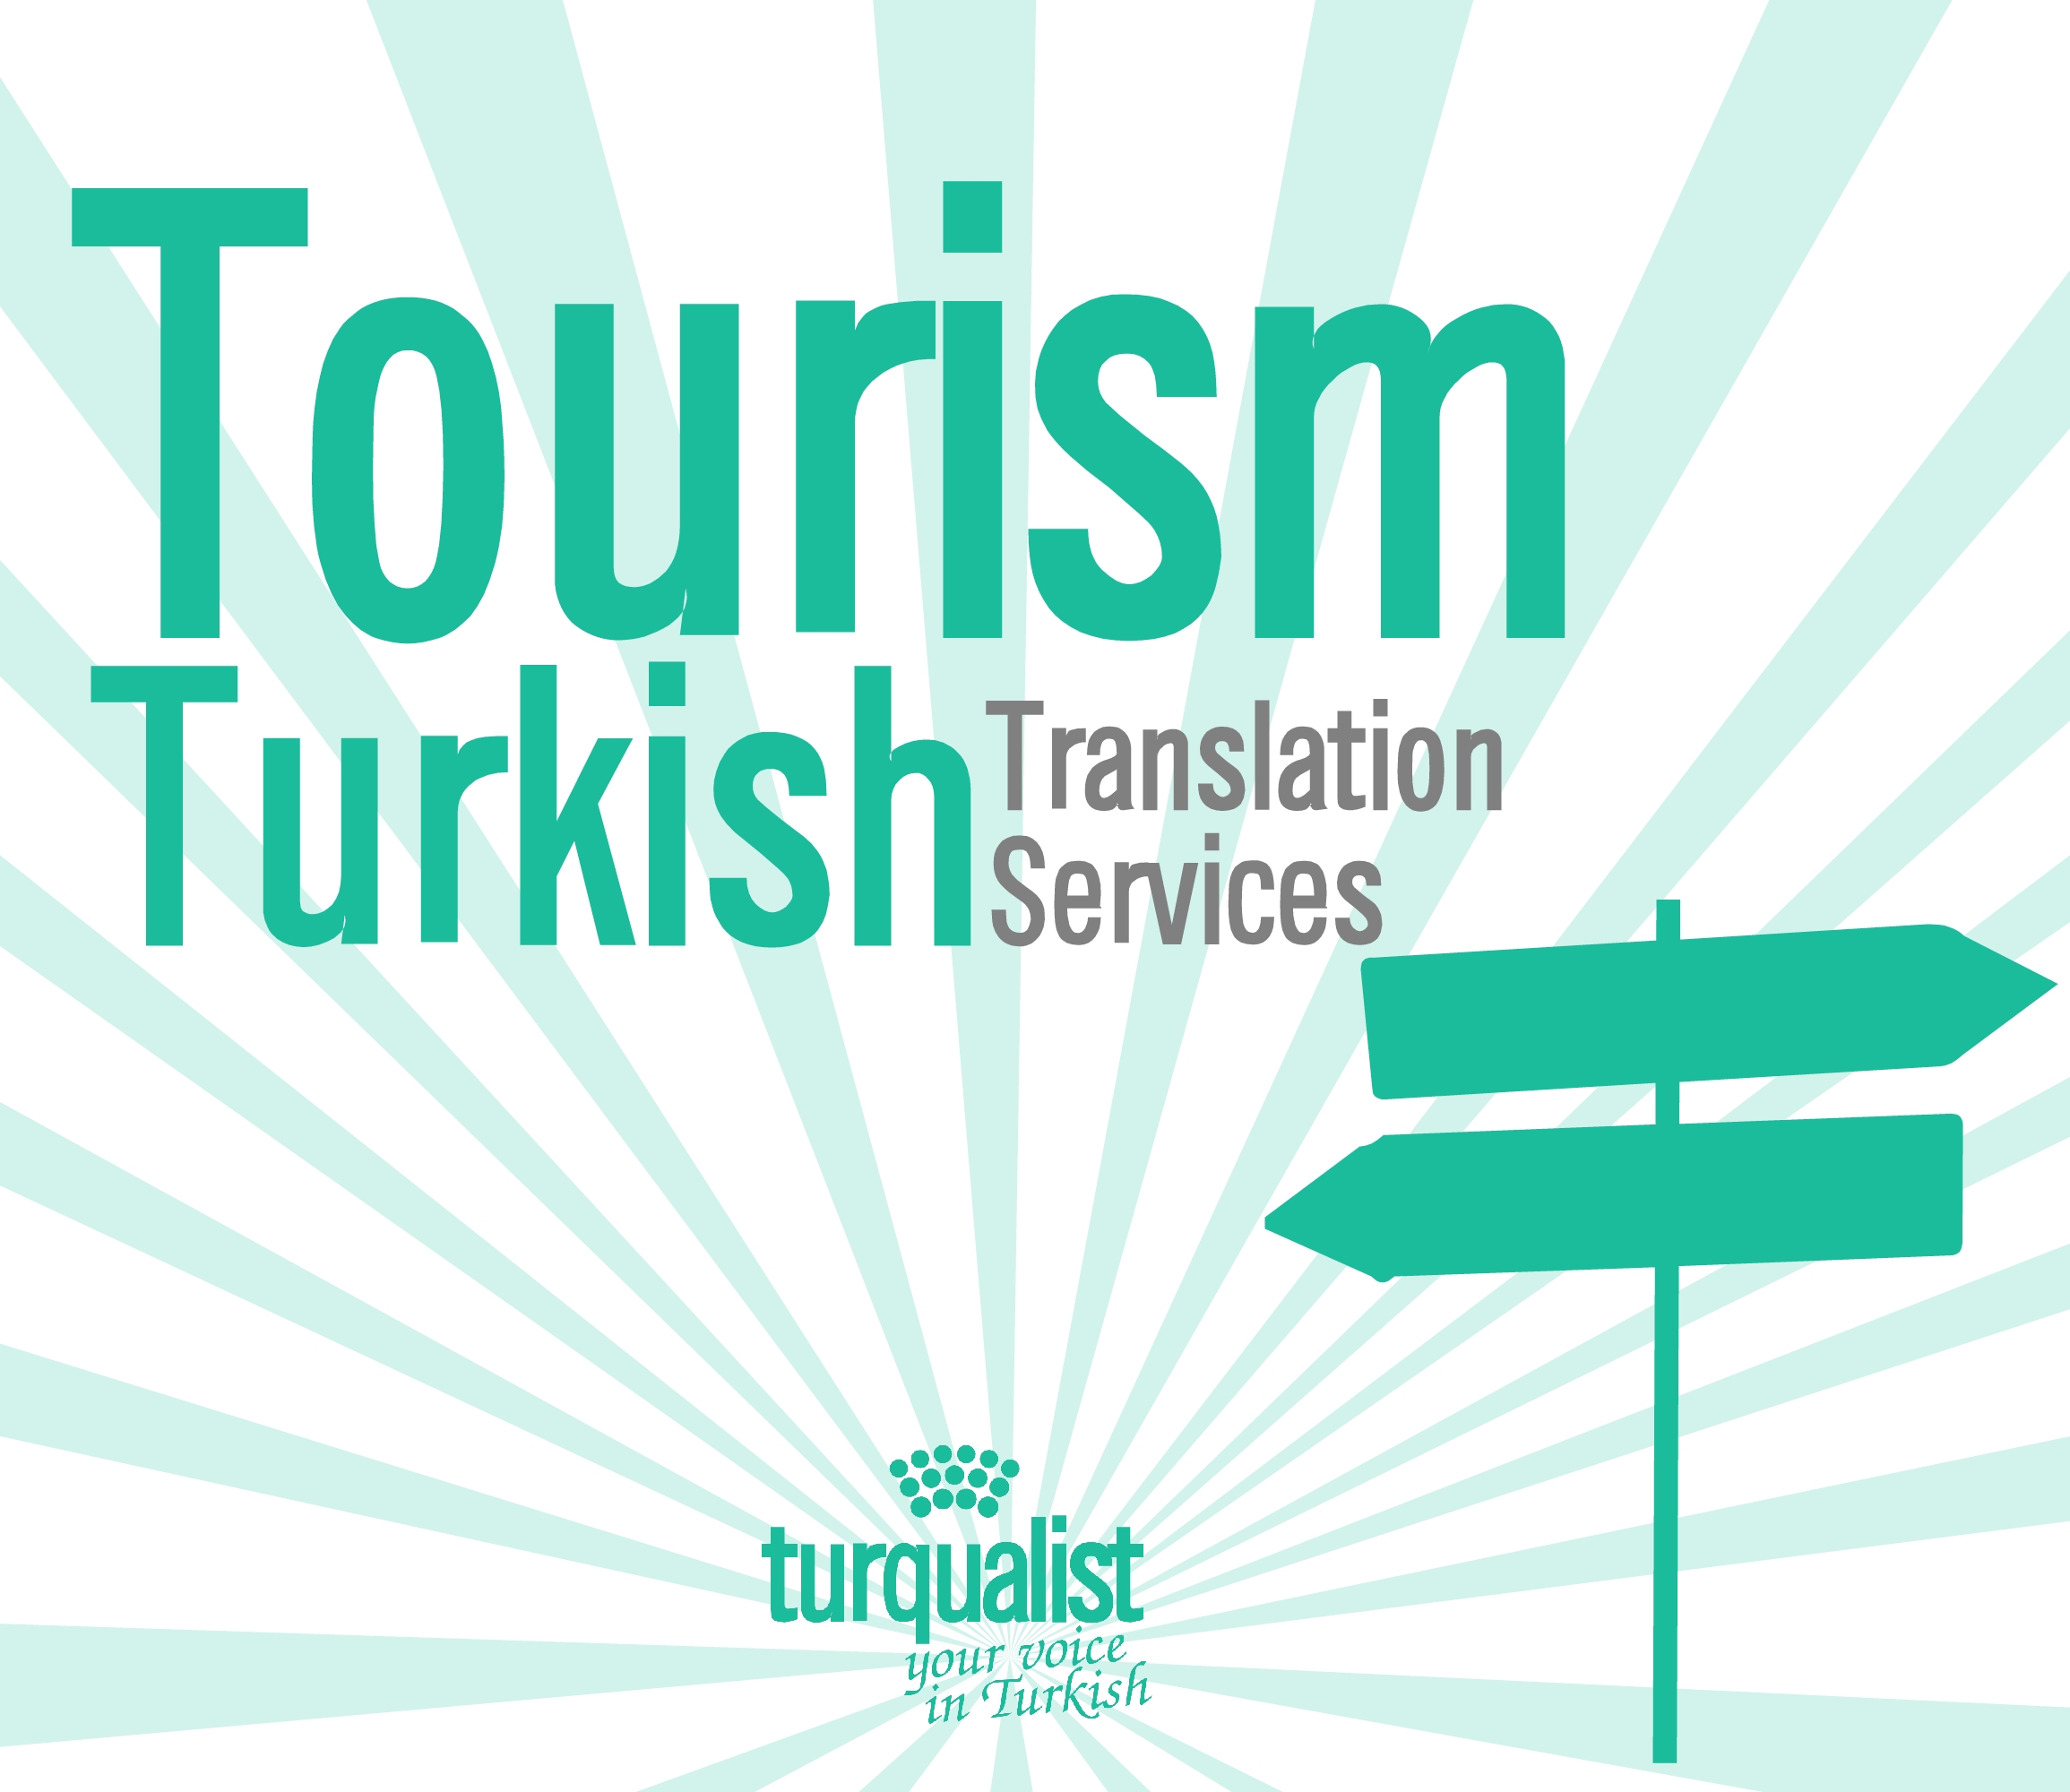 turkish tourism office uk